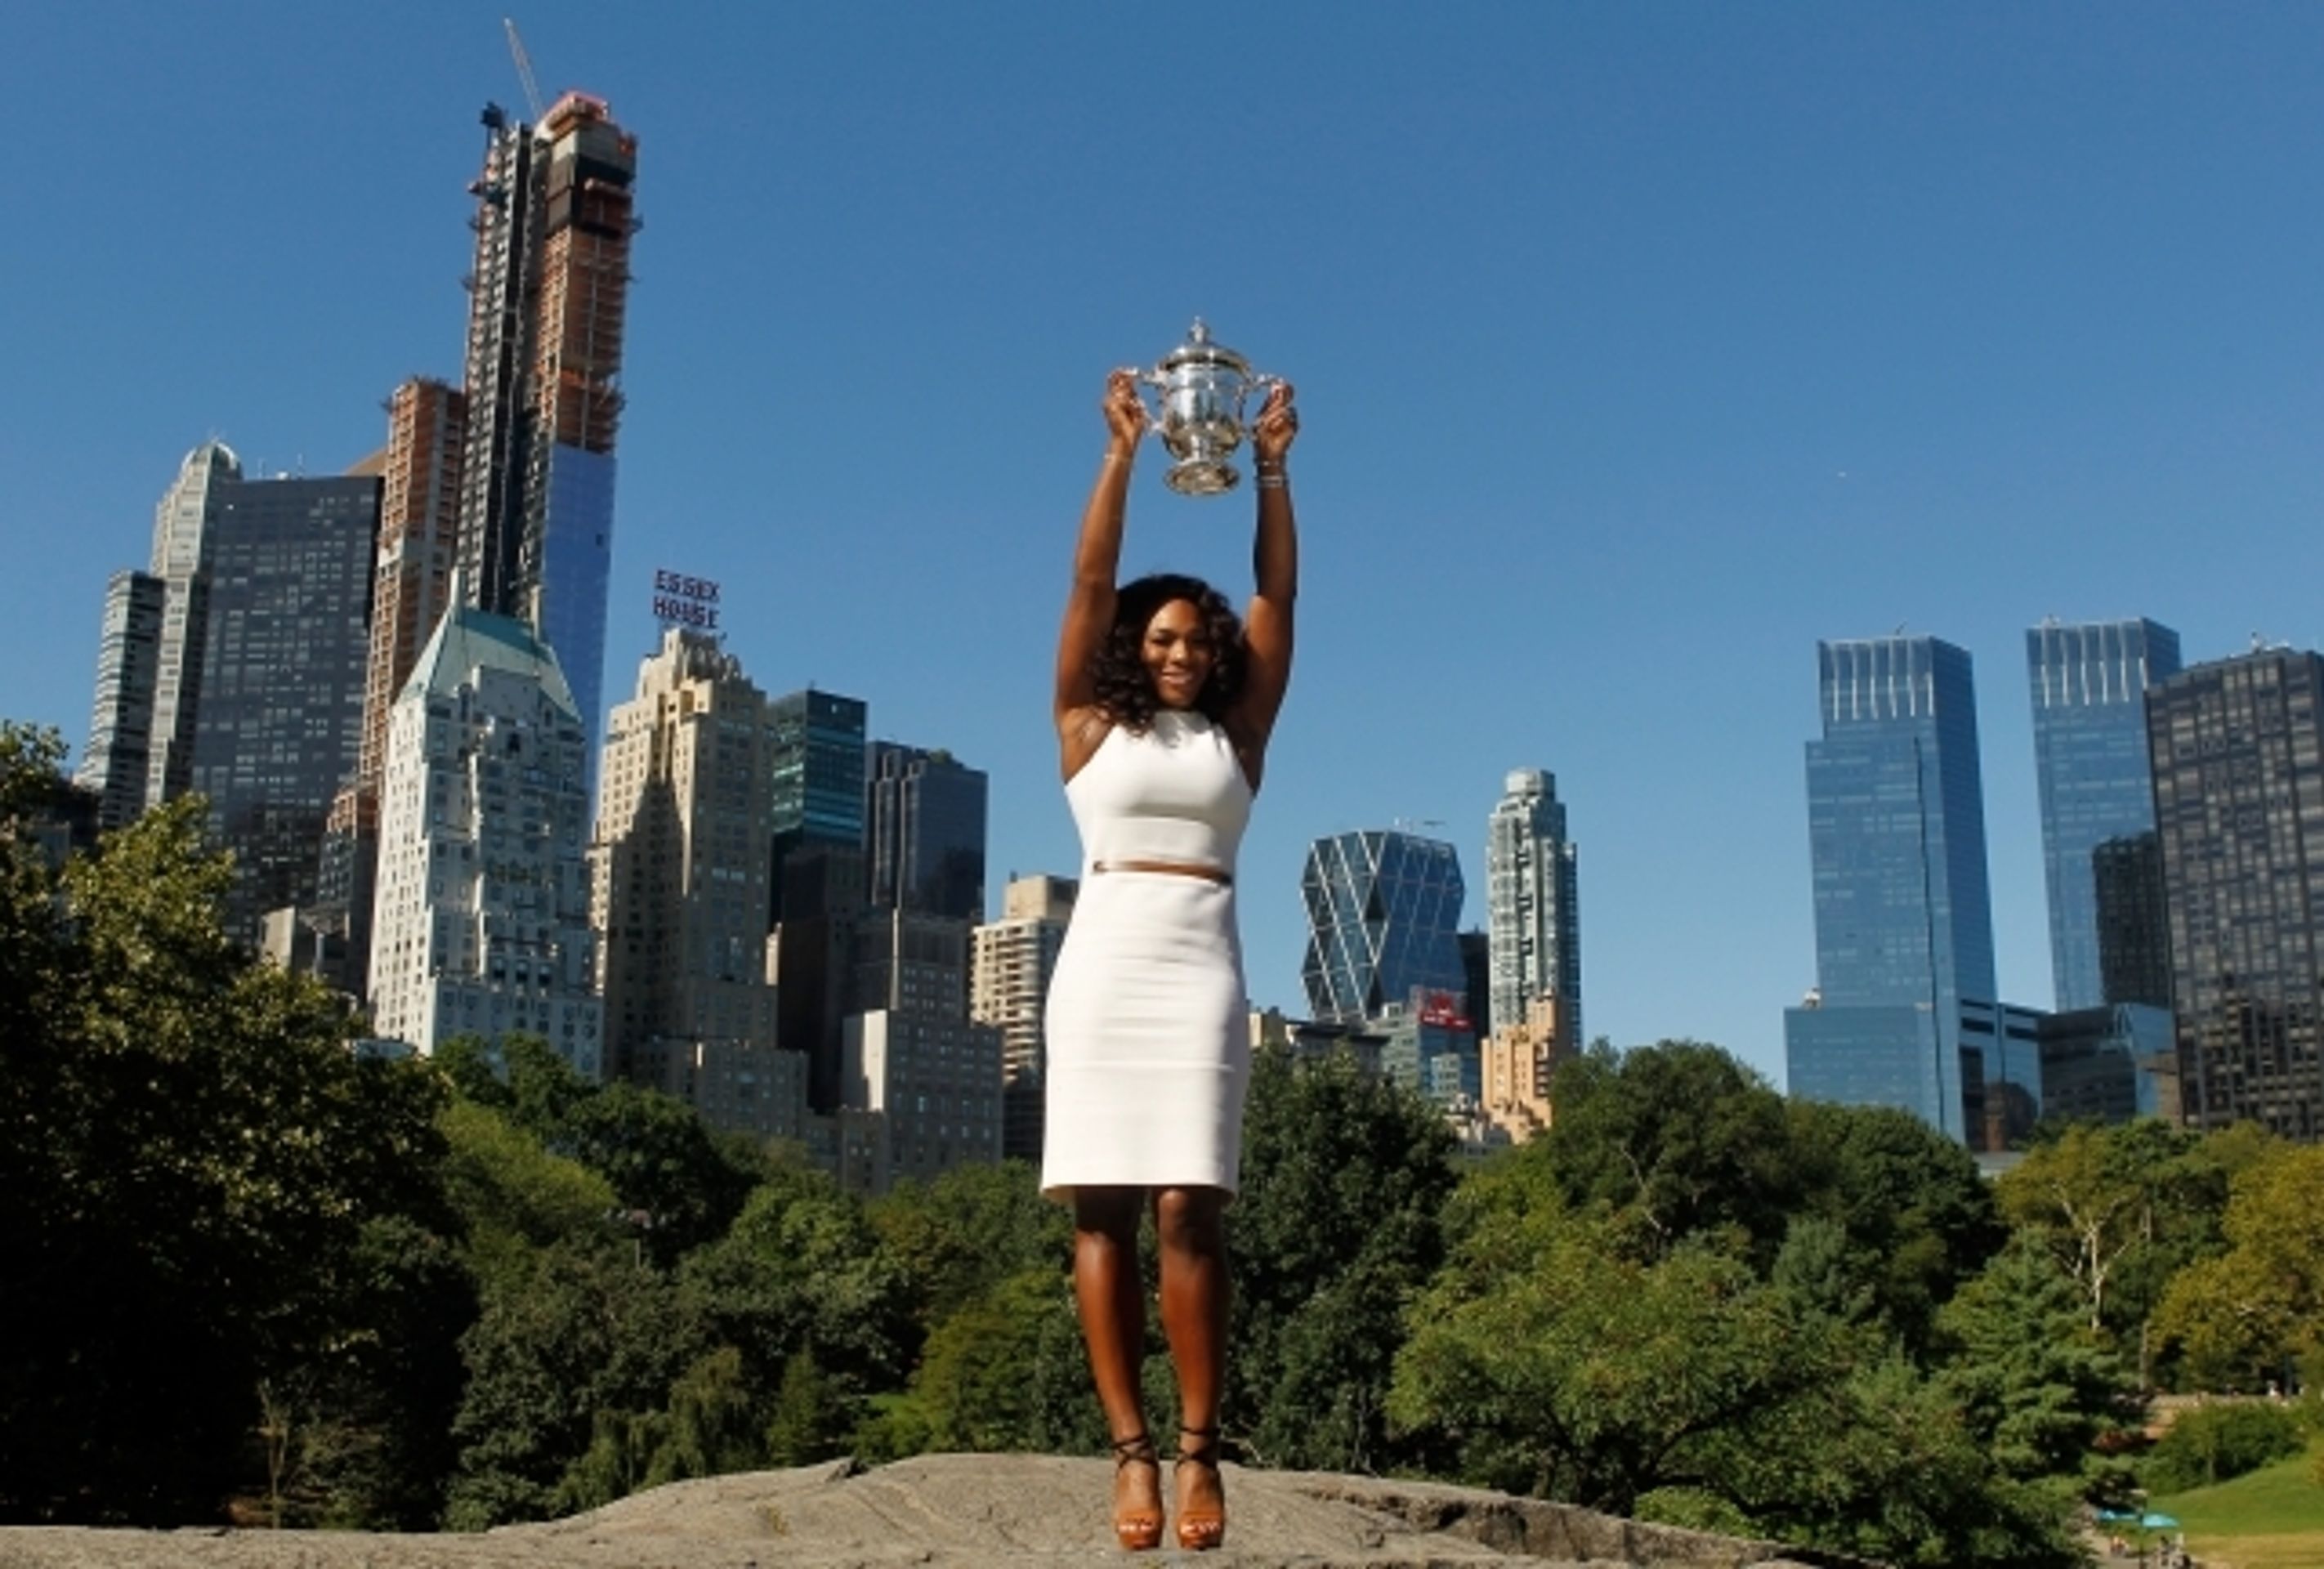 Serena Williams mrakodrapy - 7 - GALERIE: Serena Williams pózuje před mrakodrapy (2/14)